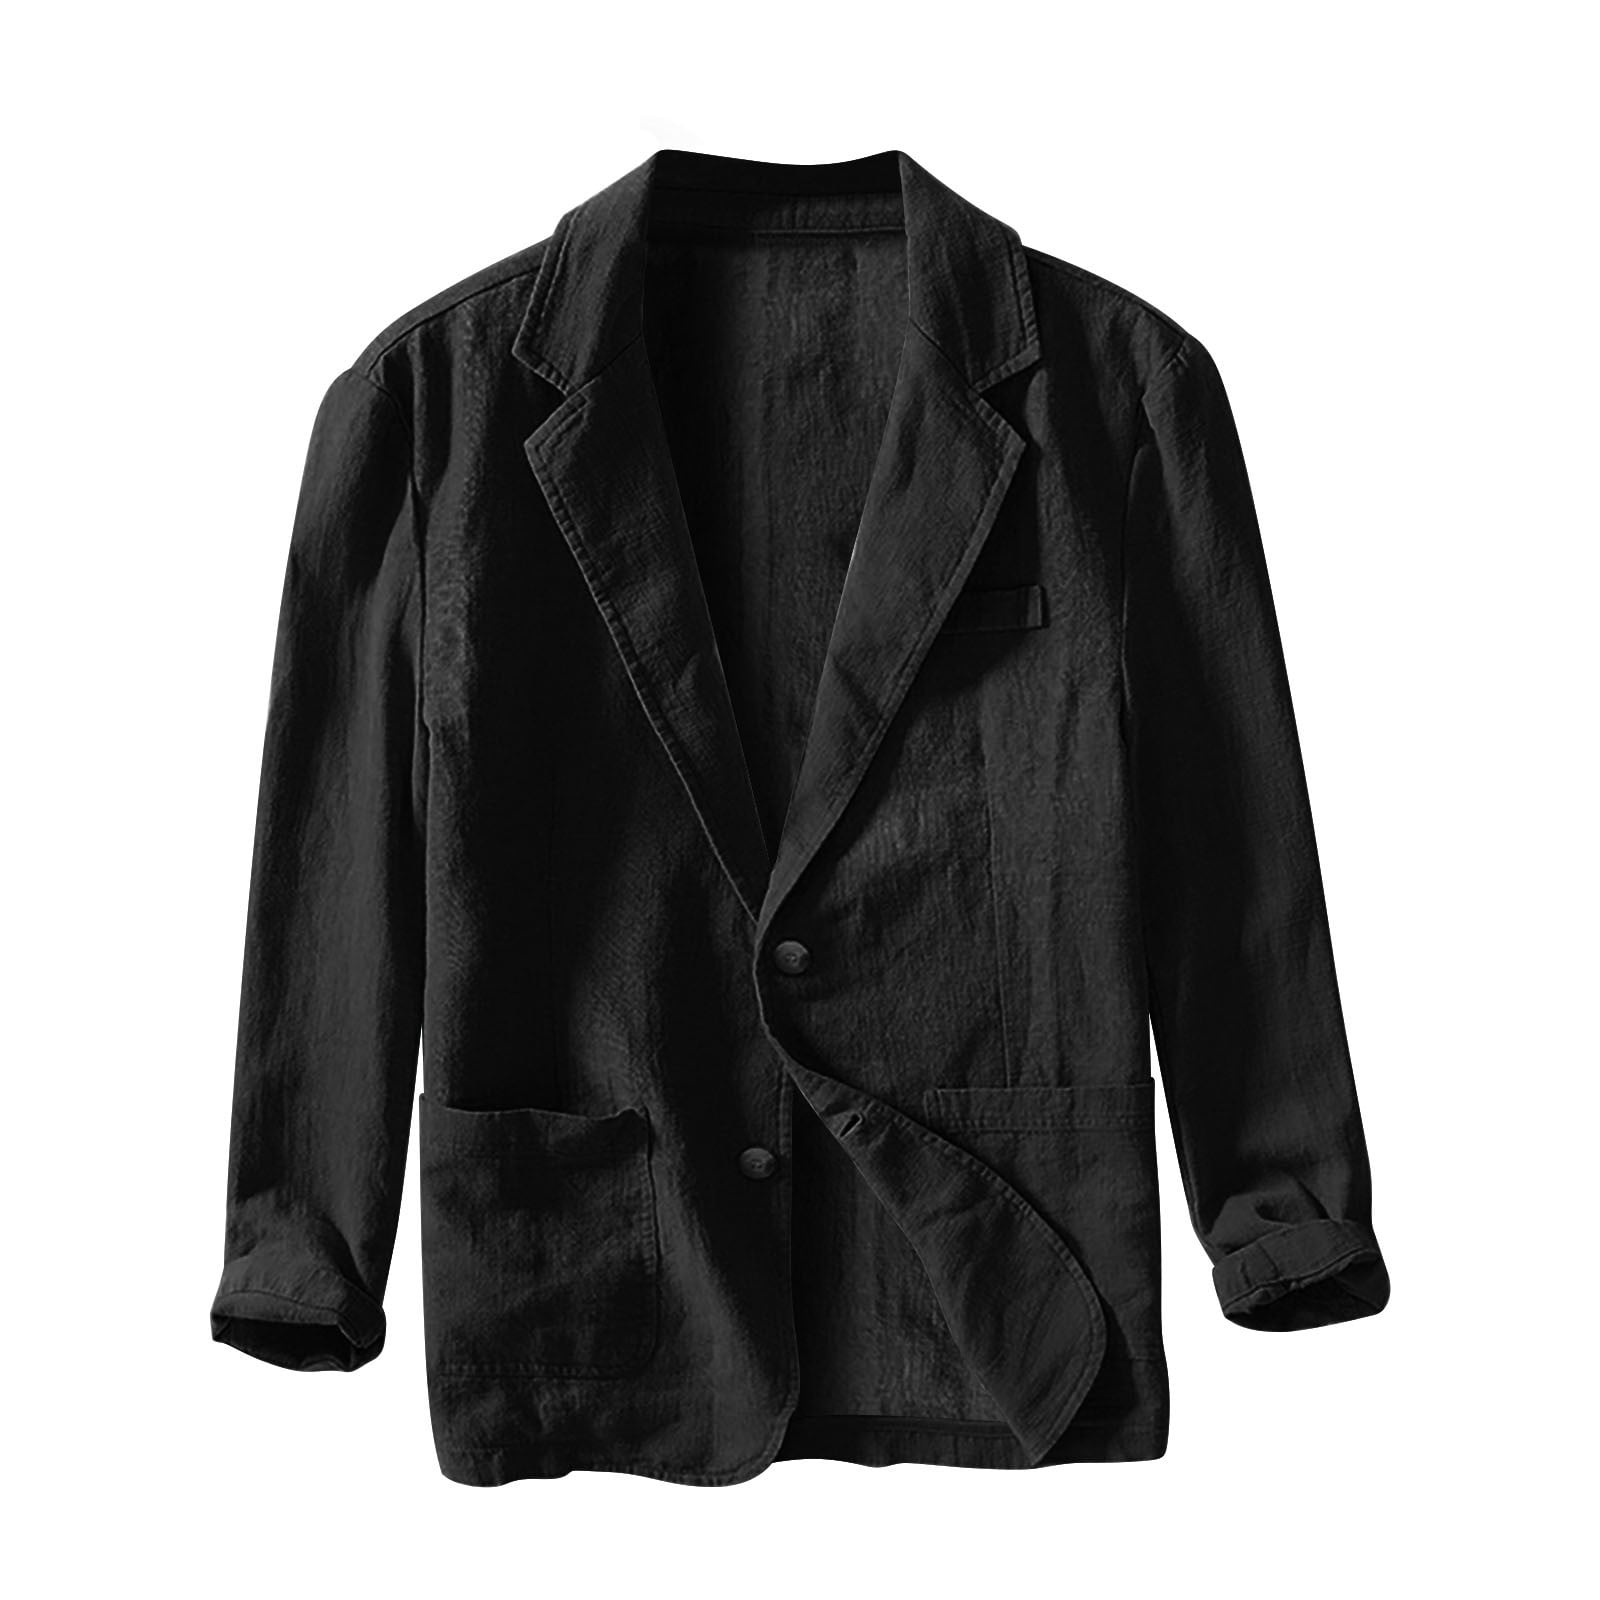 Baocc Blazer for Men Business Casual Suit Jacket Men's Loose Fitting ...